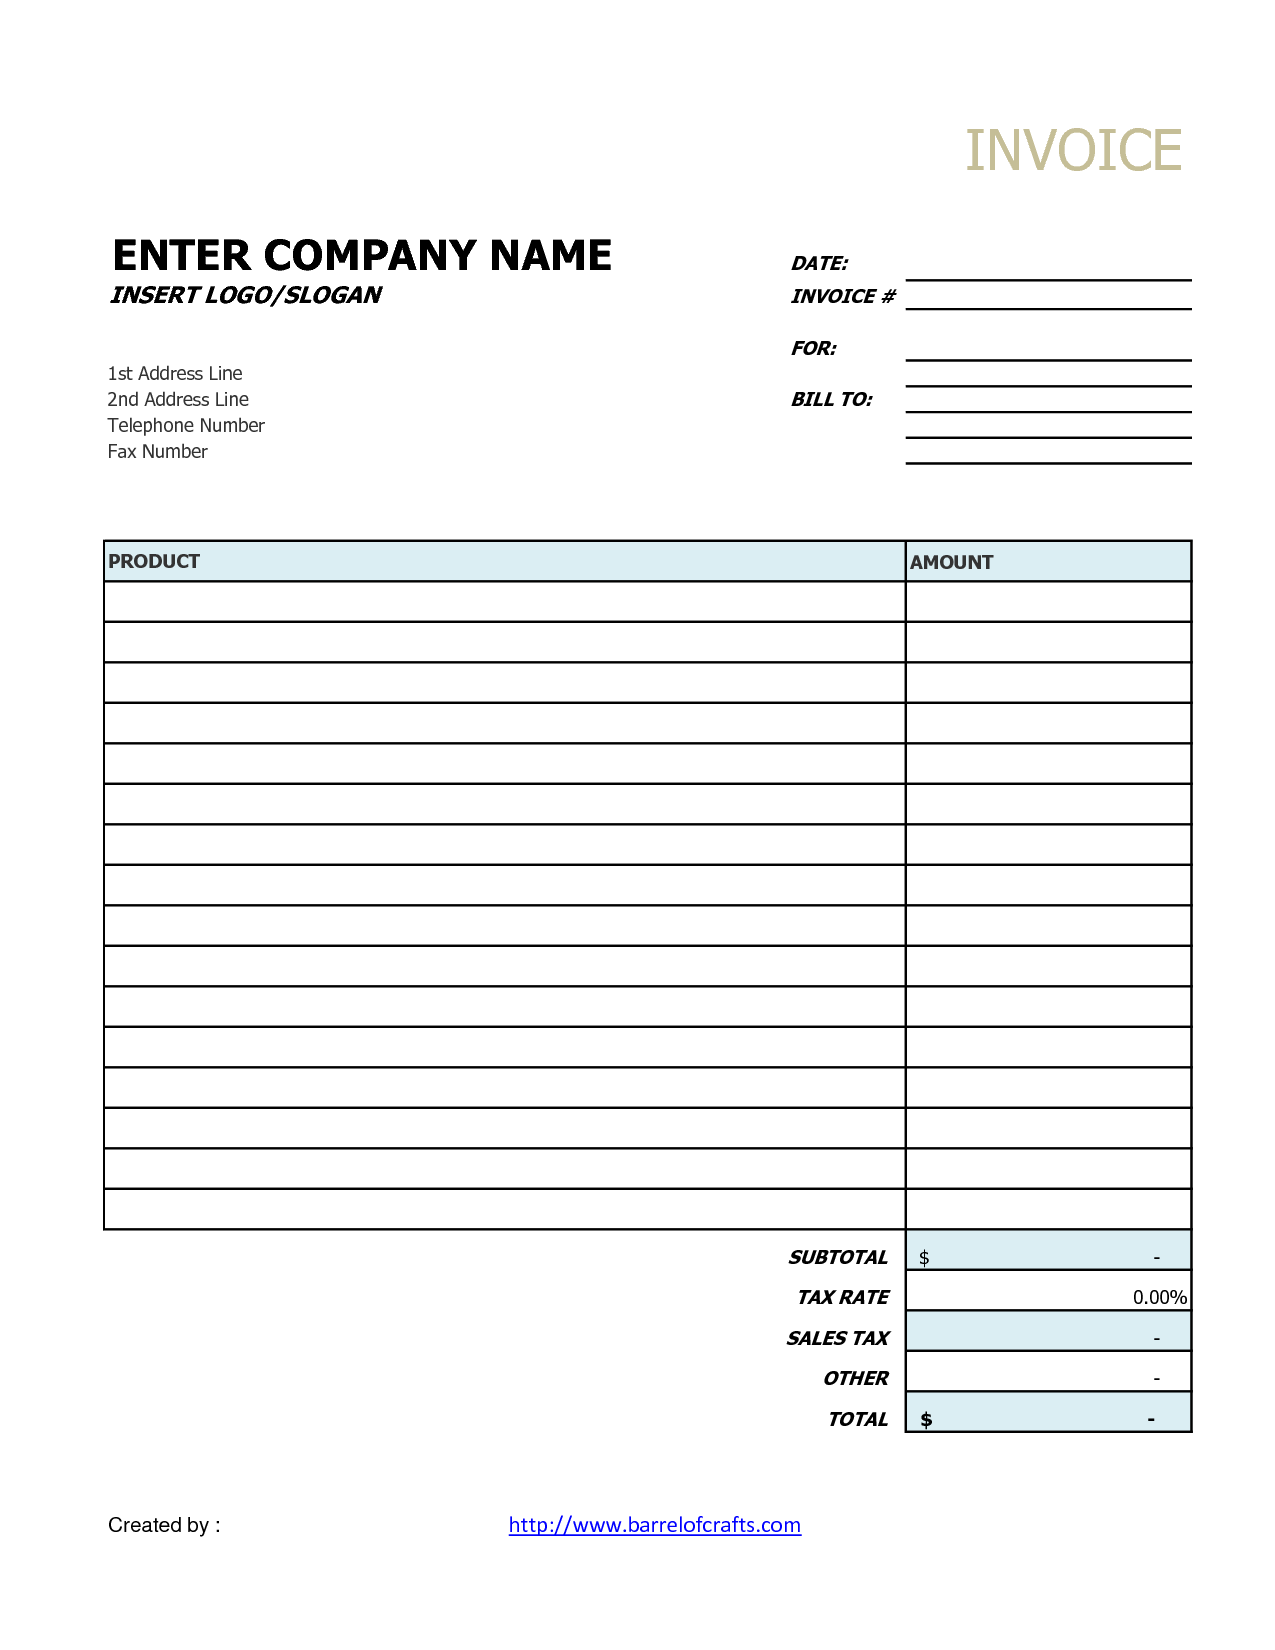 generic invoice template invoice example